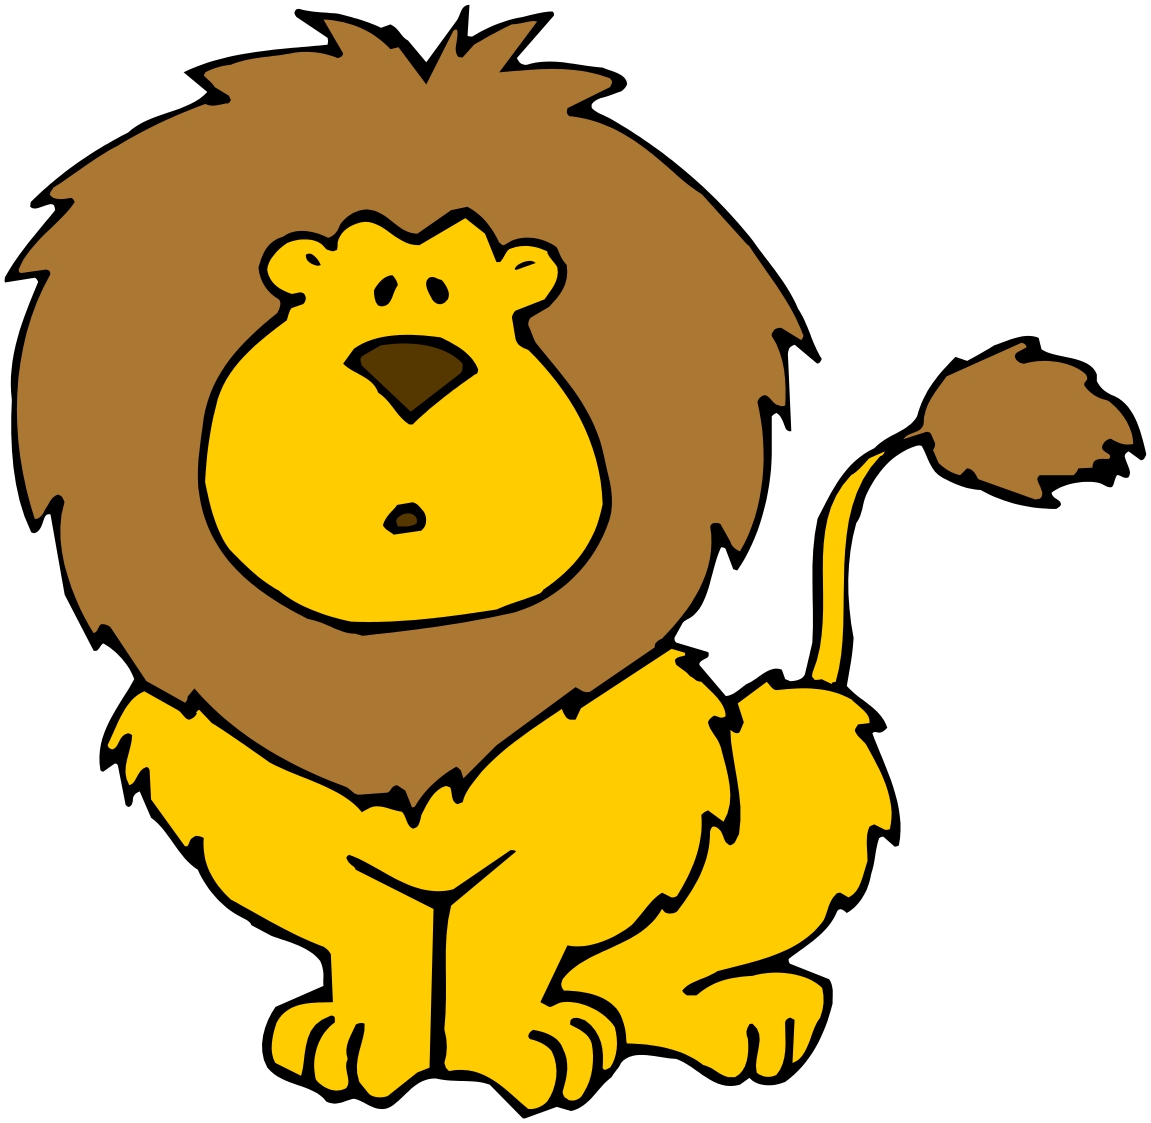 Images Of Cartoon Lions - ClipArt Best